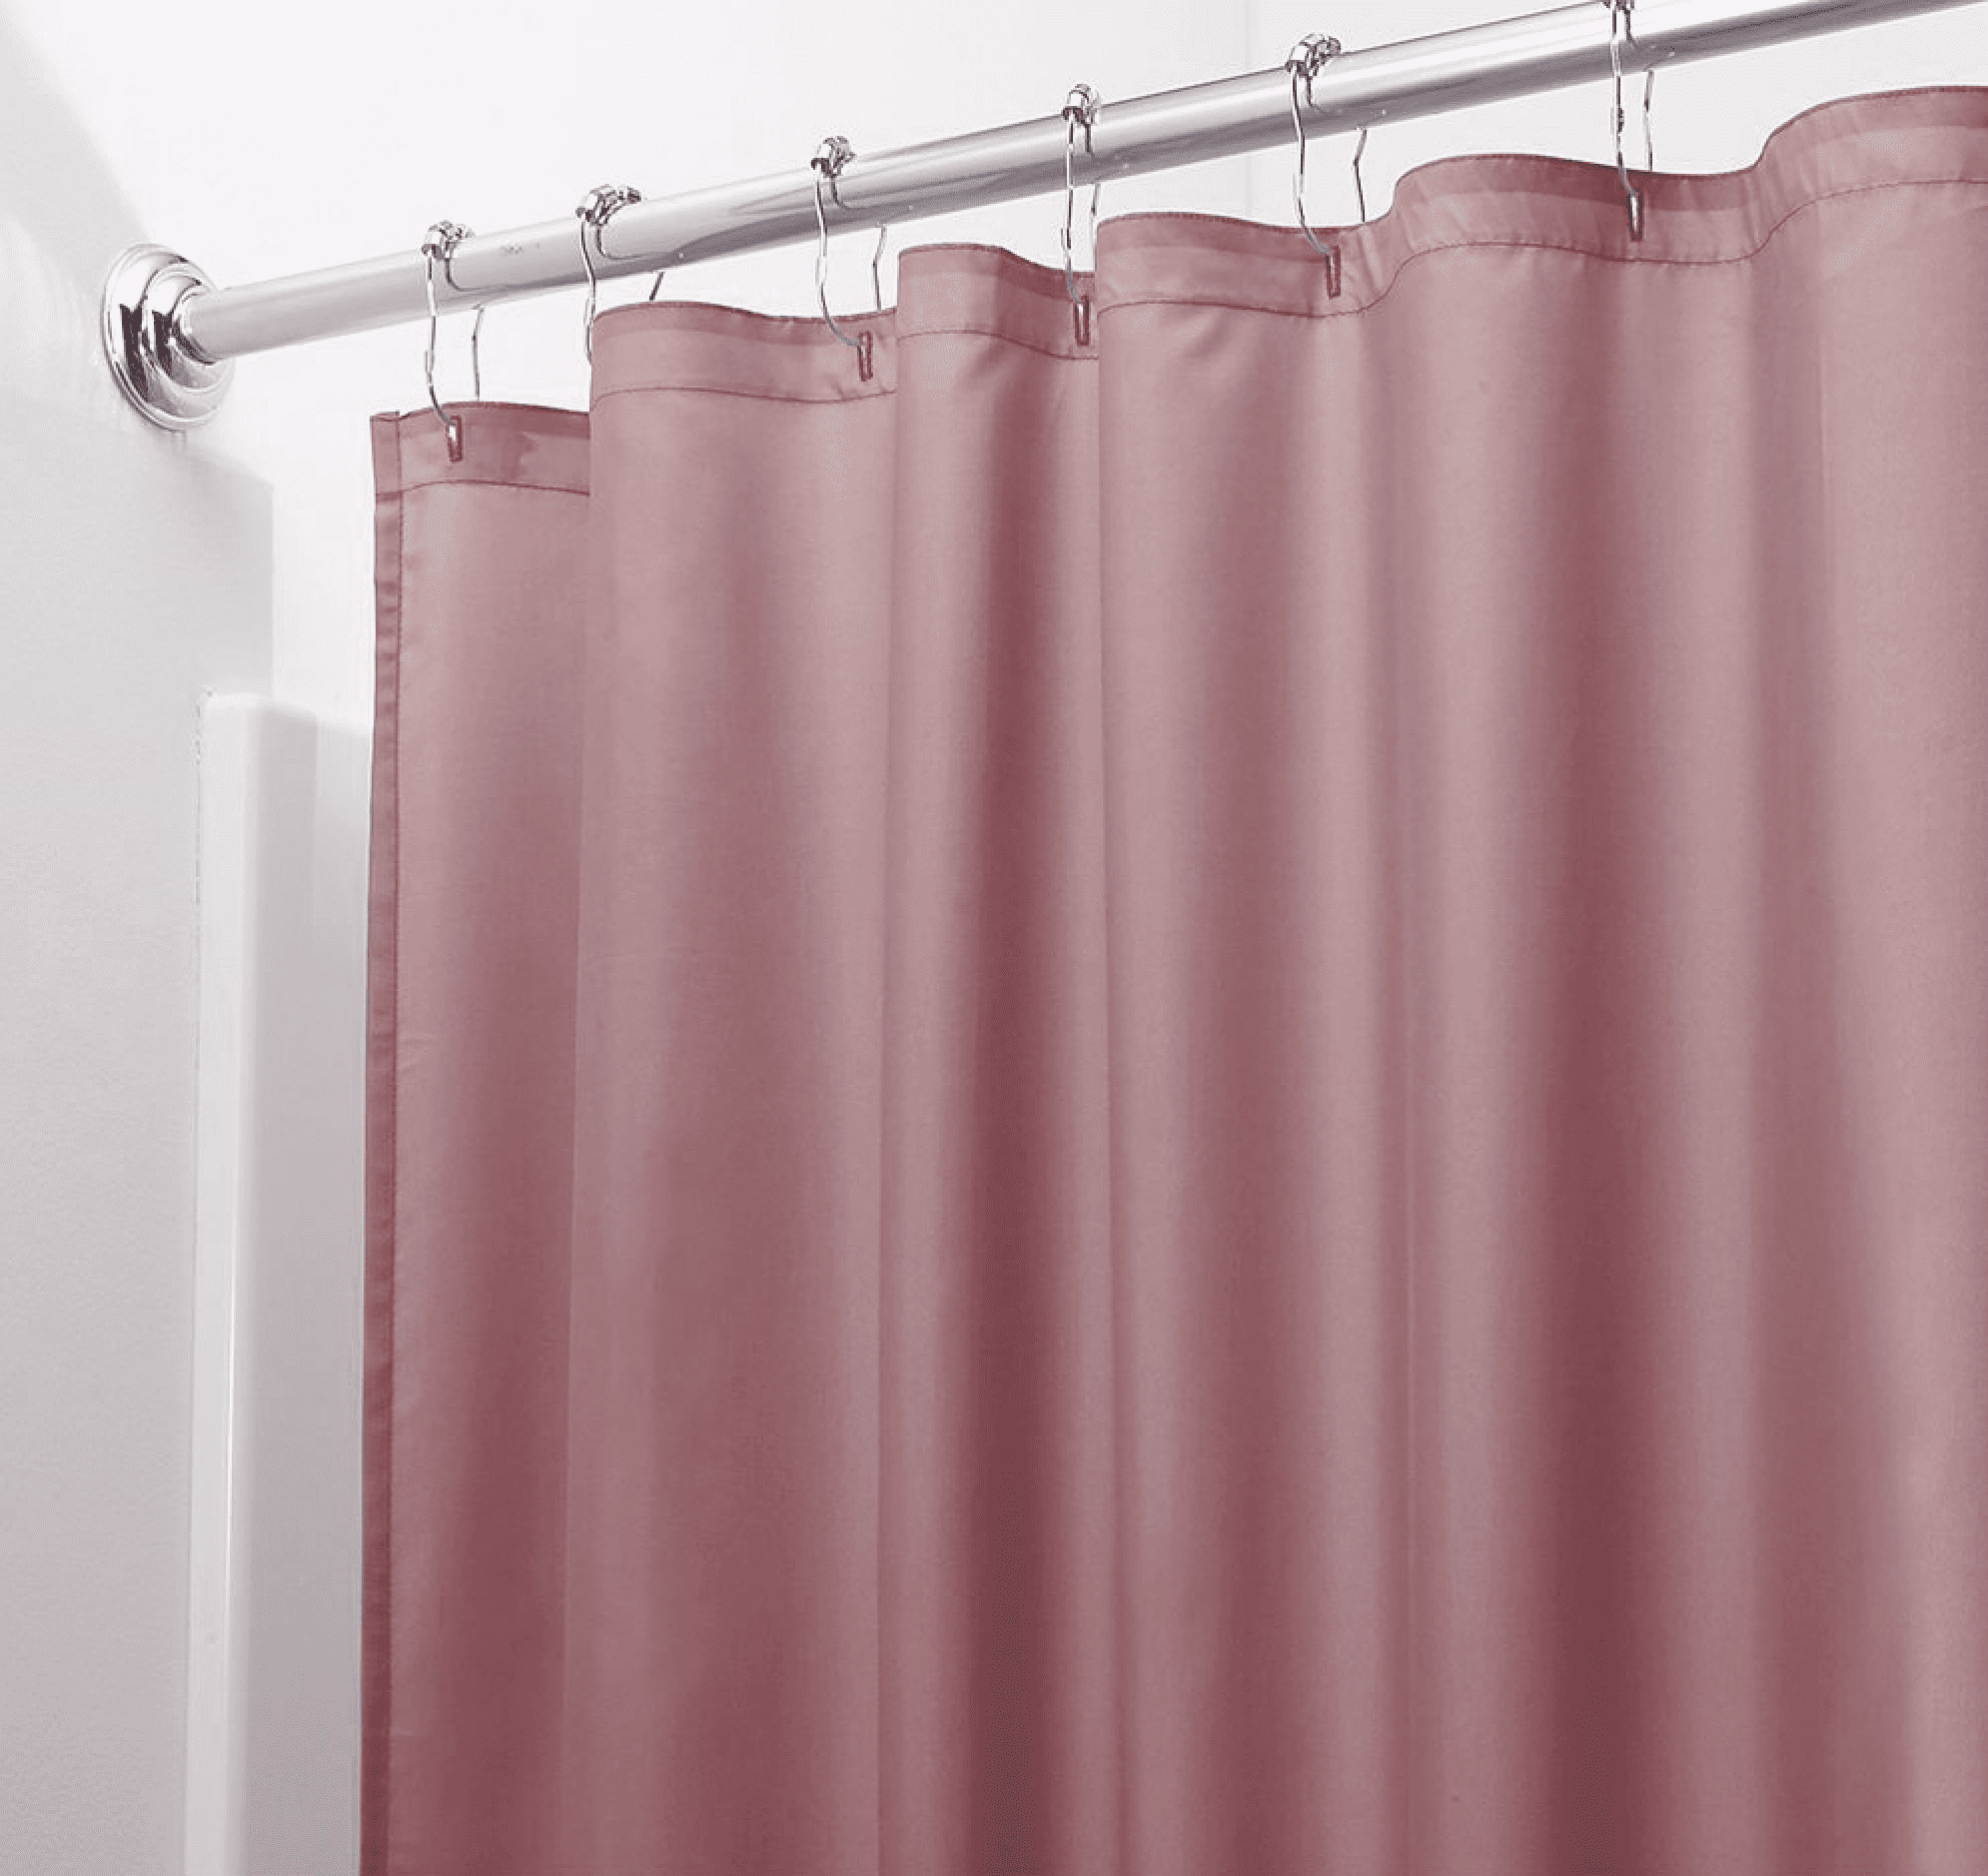 Mold Mildew Resistant Fabric Shower, Mildew Proof Shower Curtain Liner